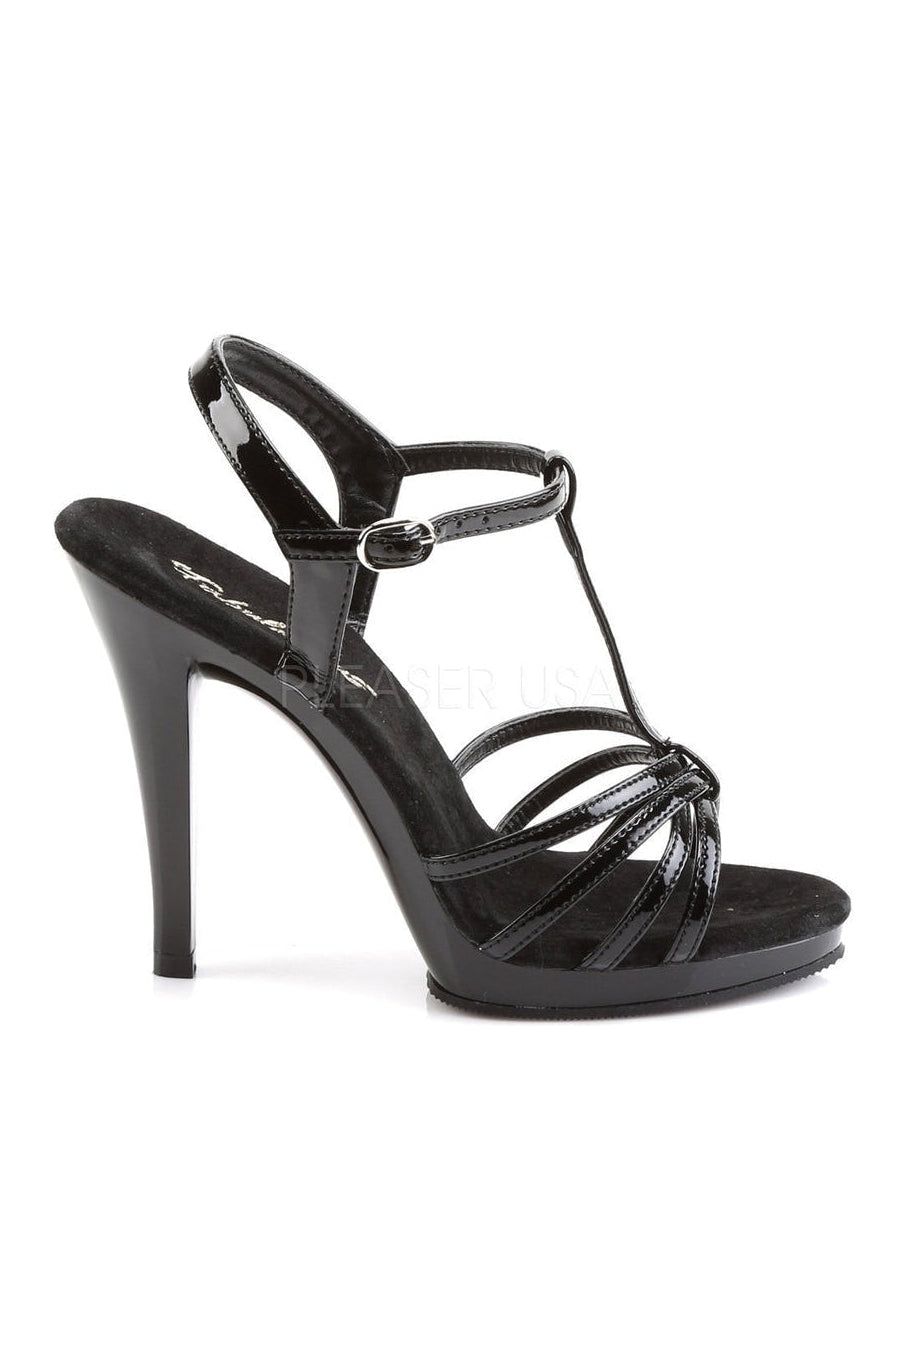 FLAIR-420 Sandal | Black Patent-Fabulicious-Sandals-SEXYSHOES.COM